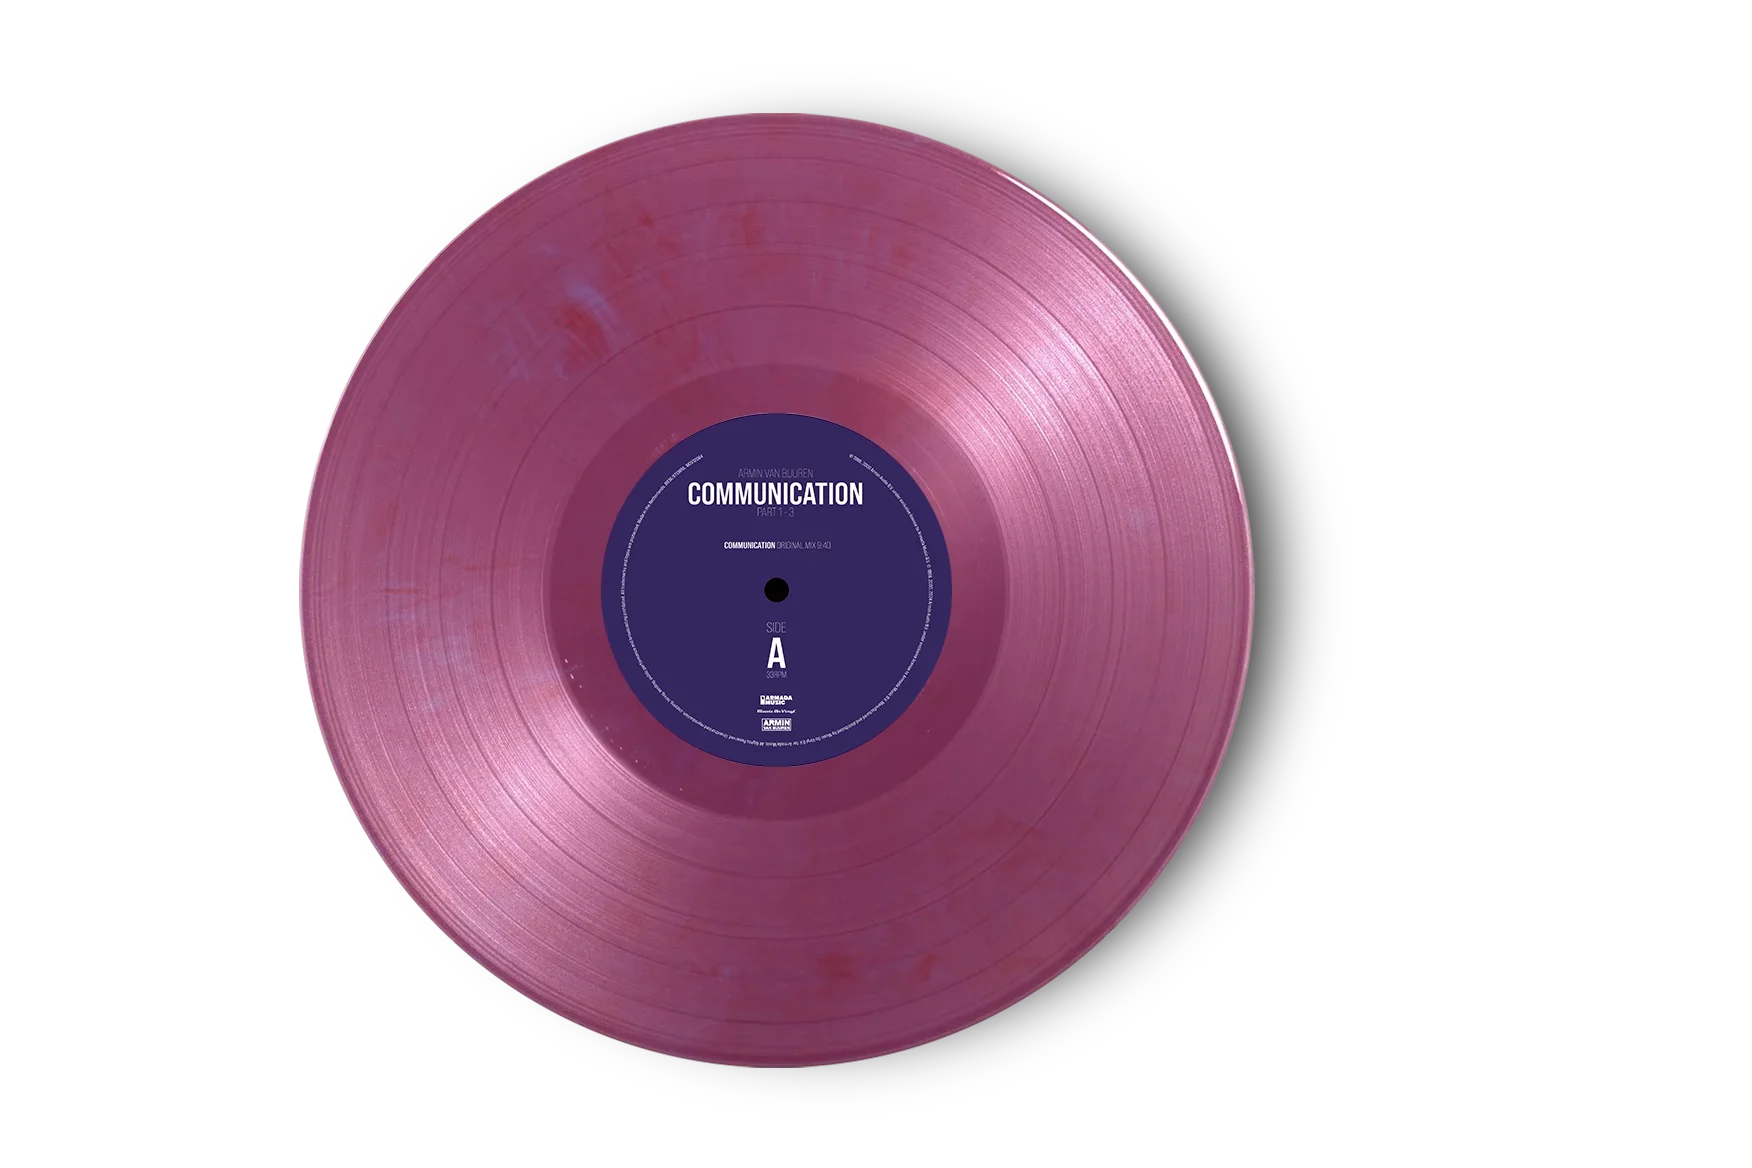 ARMIN VAN BUUREN - Communication 1-3 (25th Anniversary Edition) - LP - 180g Translucent Purple Vinyl [MAY 31]